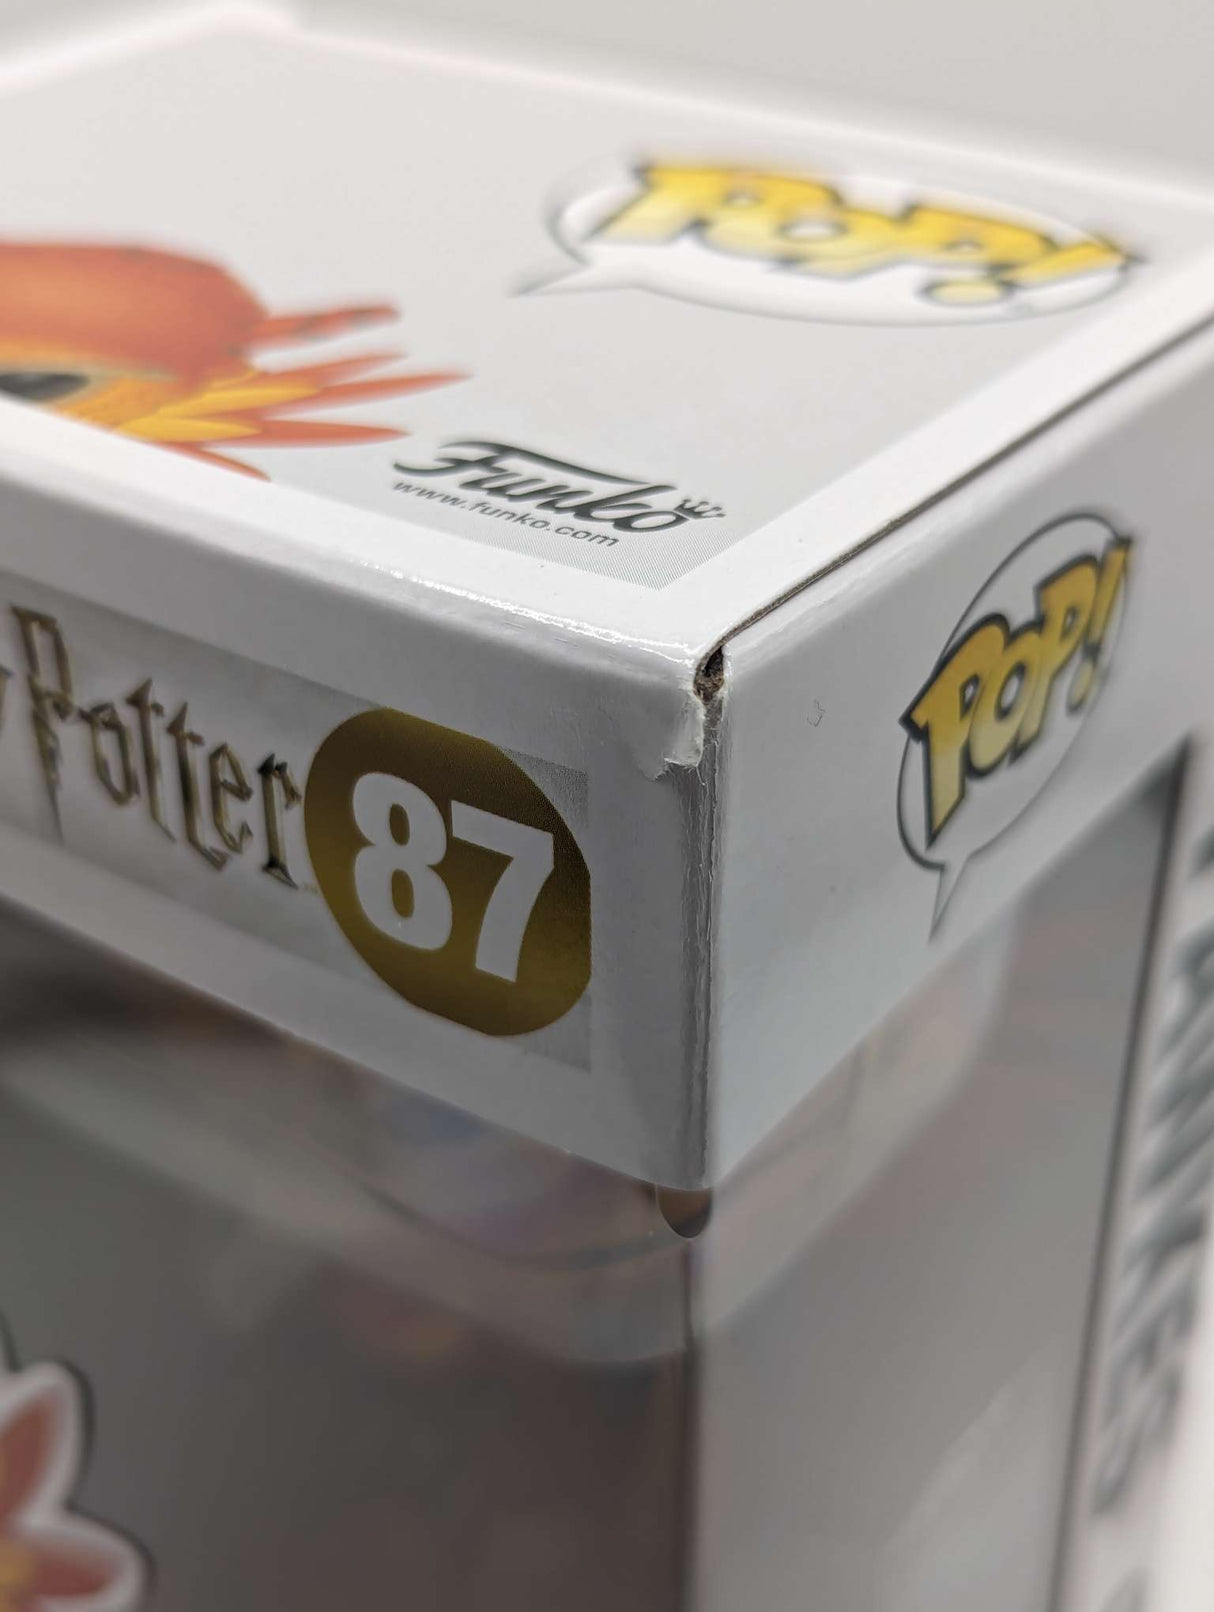 Damaged Box | Funko Pop Harry Potter | Fawkes #87